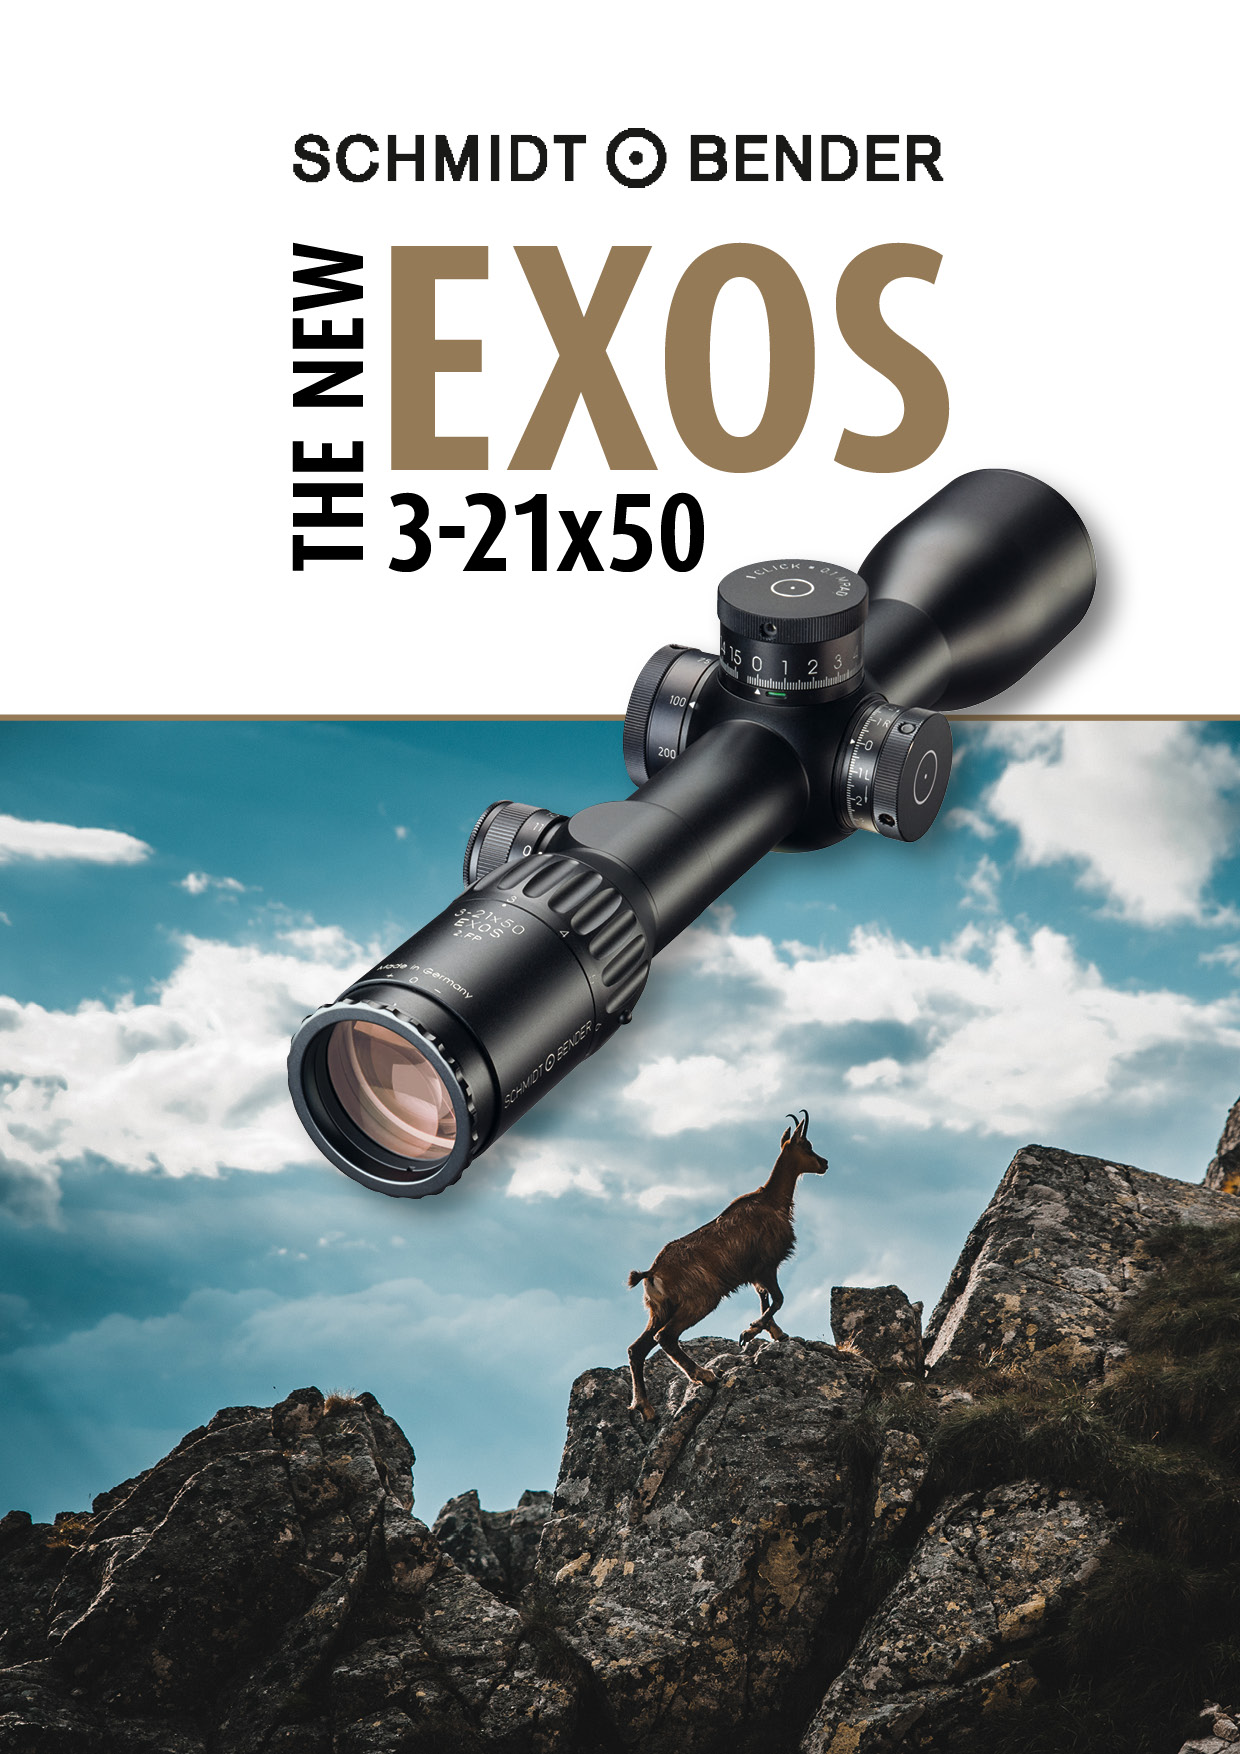 3-21x50 Exos with landscape chamois